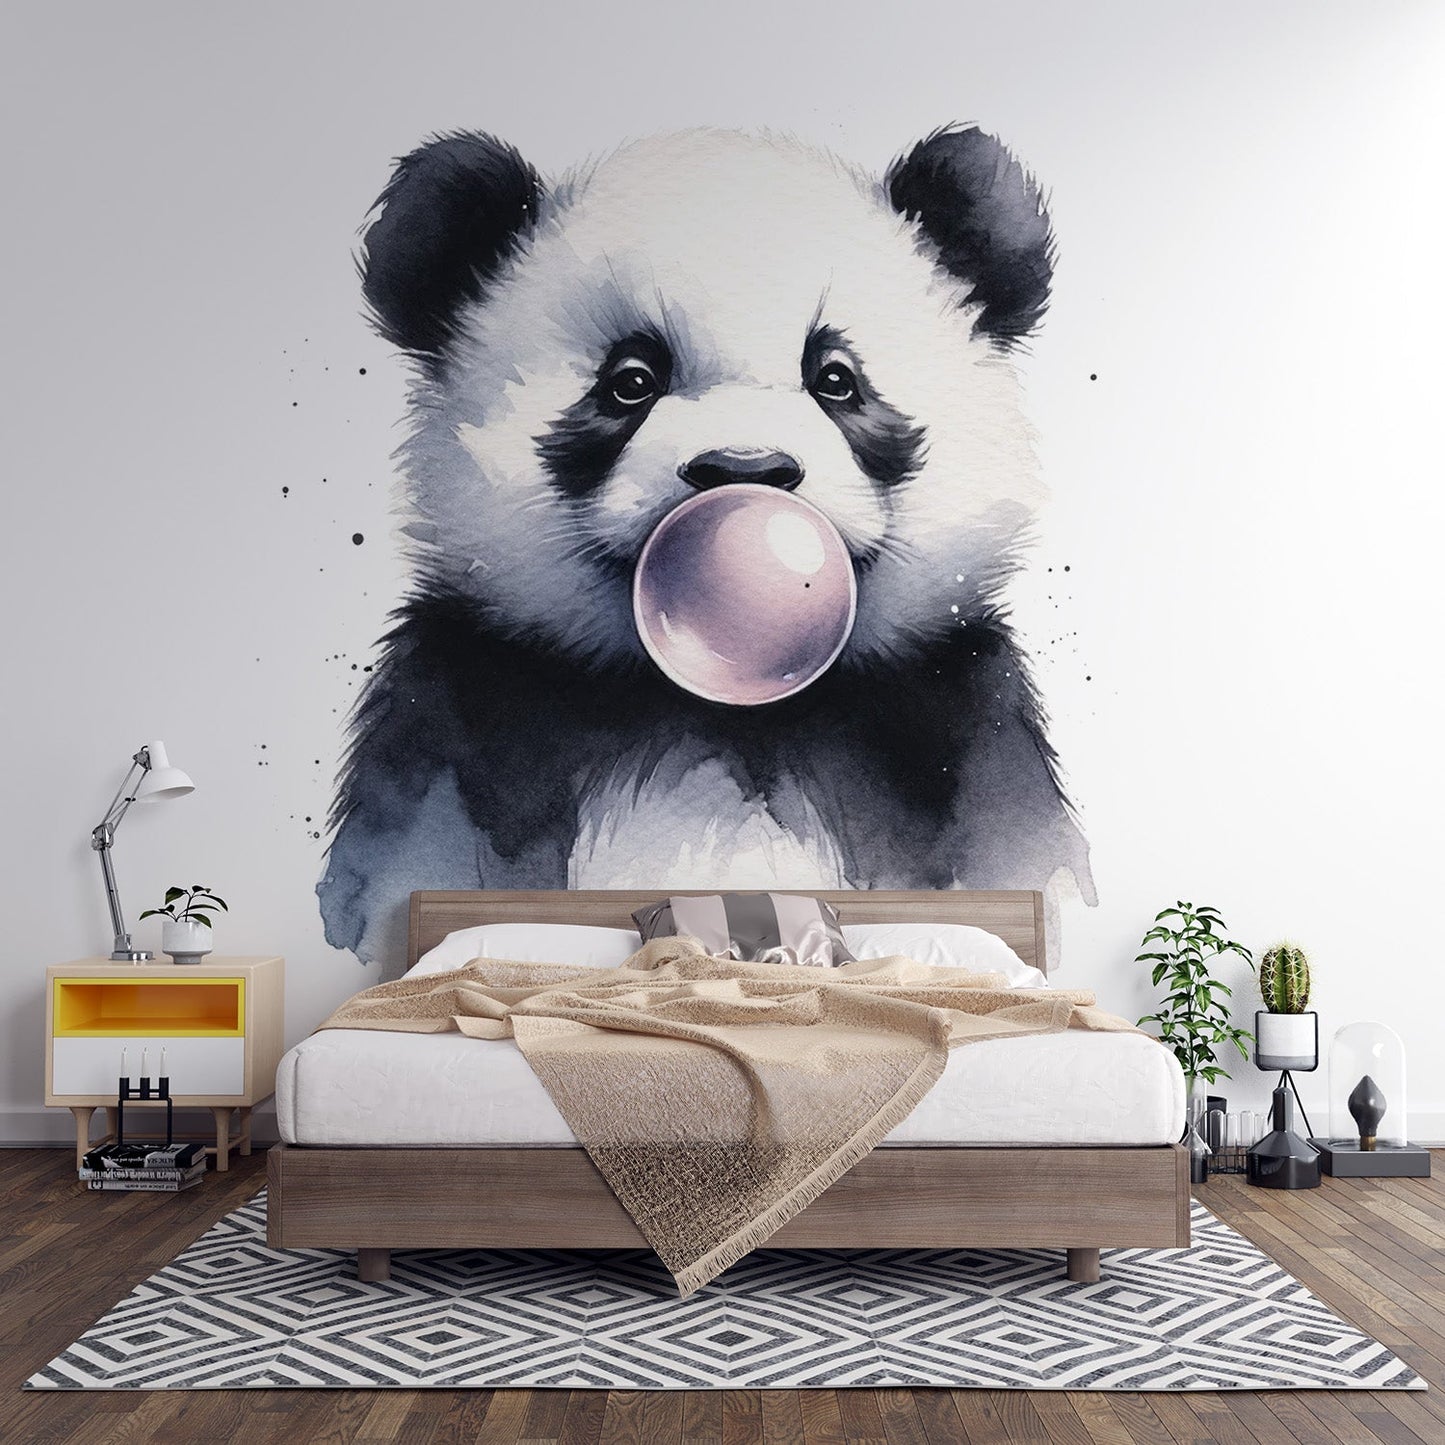 Panda wallpaper | Panda portrait with chewing gum